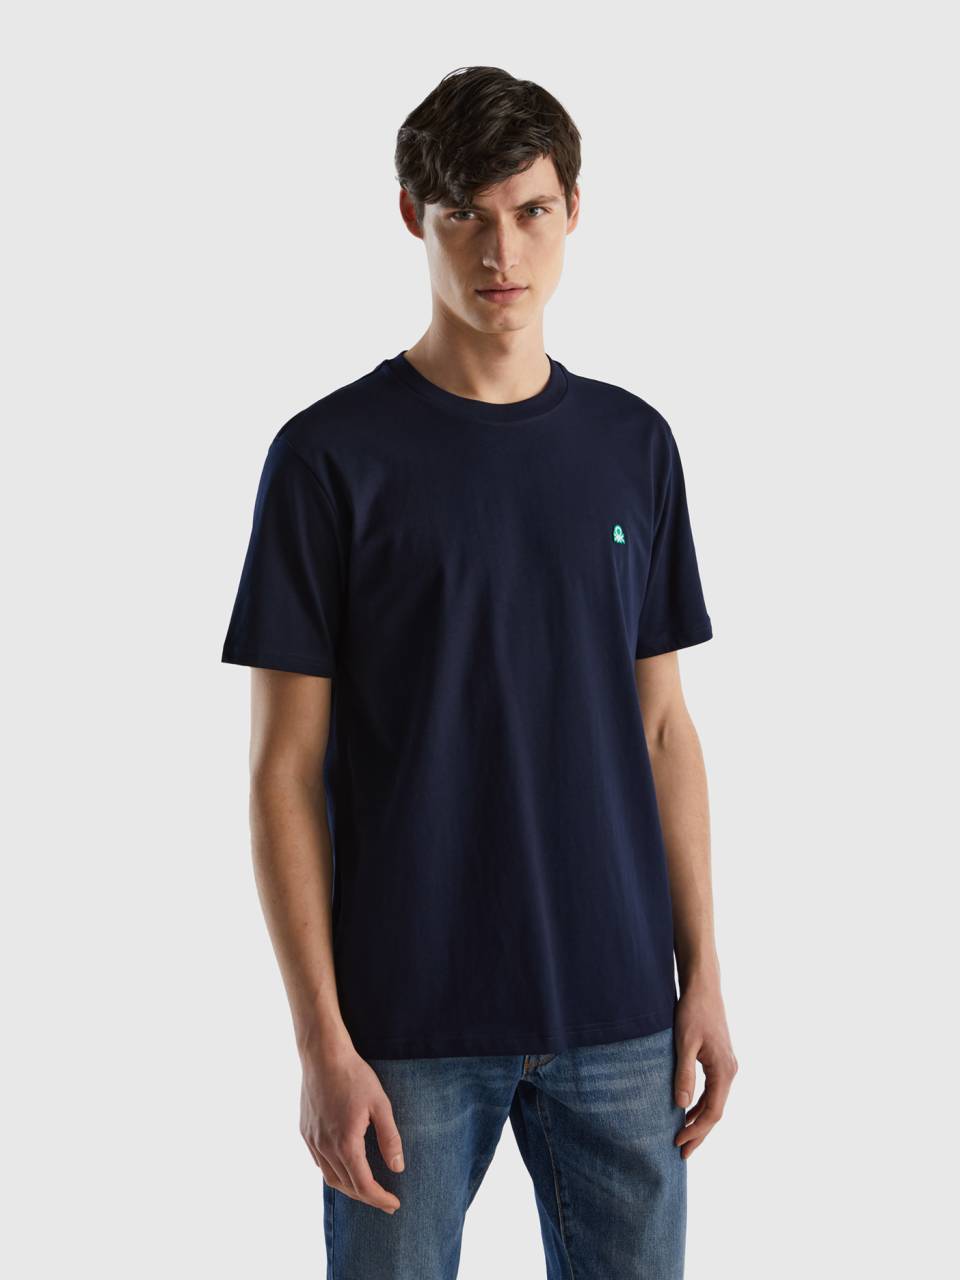 cotton 100% basic Dark organic - Blue | t-shirt Benetton